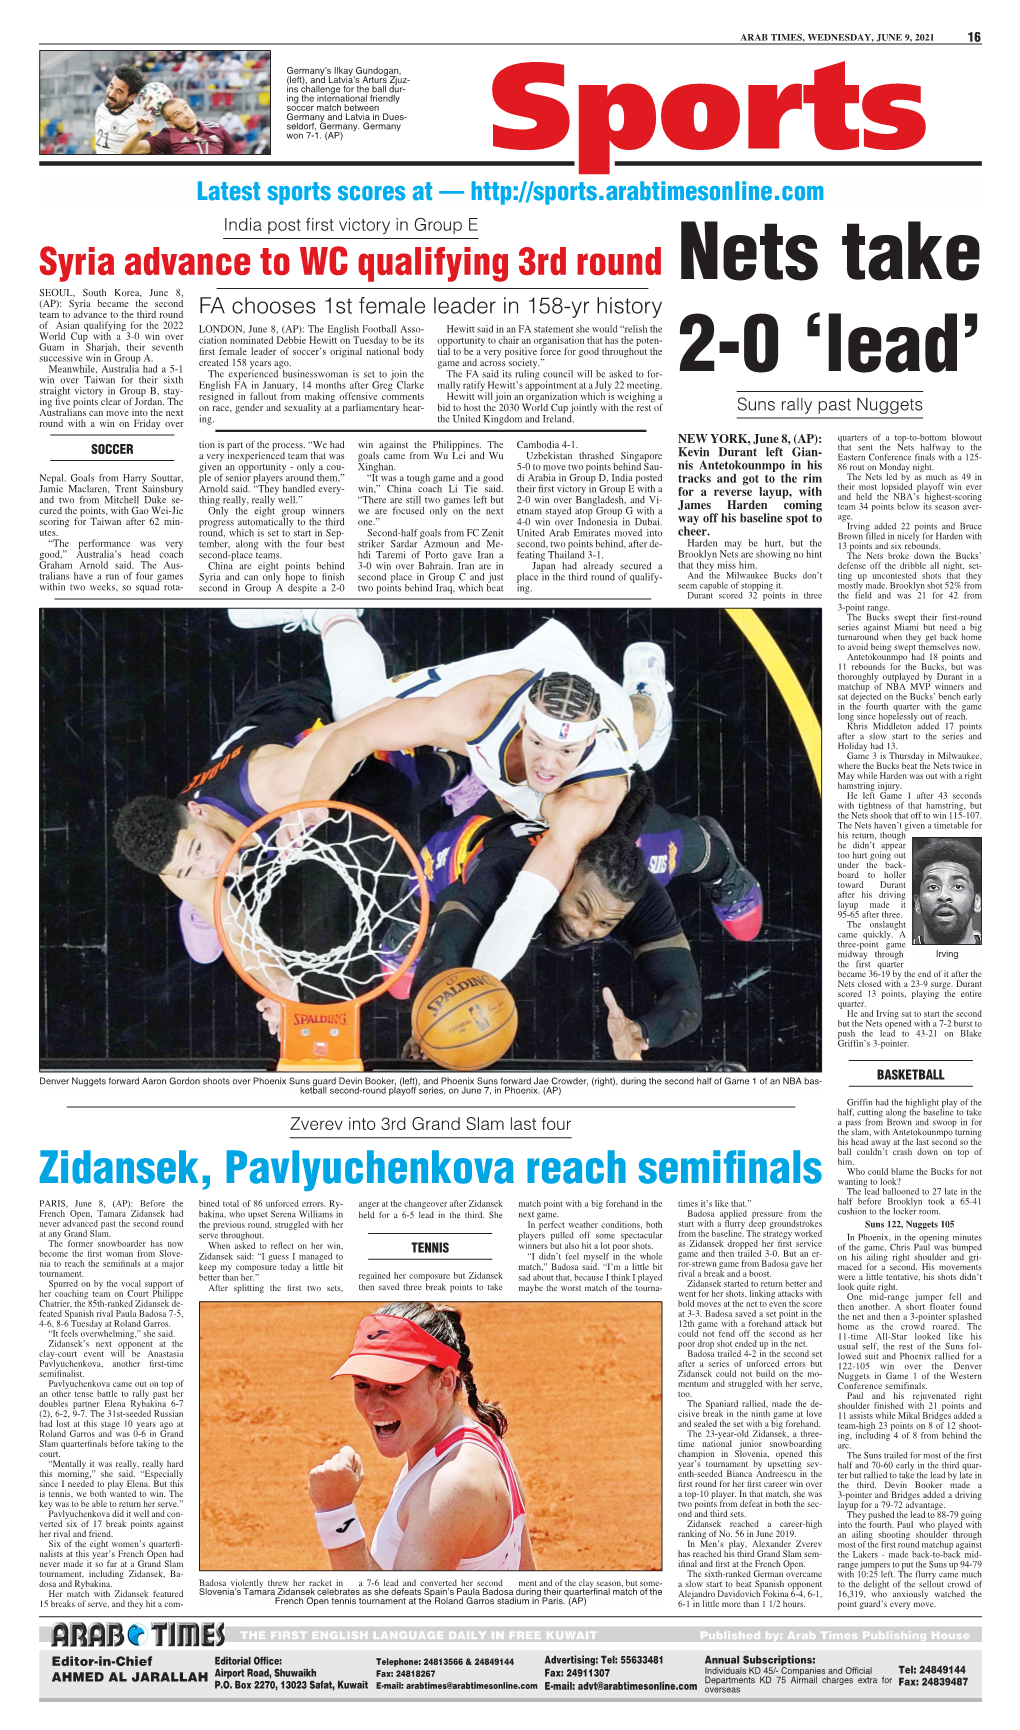 Zidansek, Pavlyuchenkova Reach Semifinals